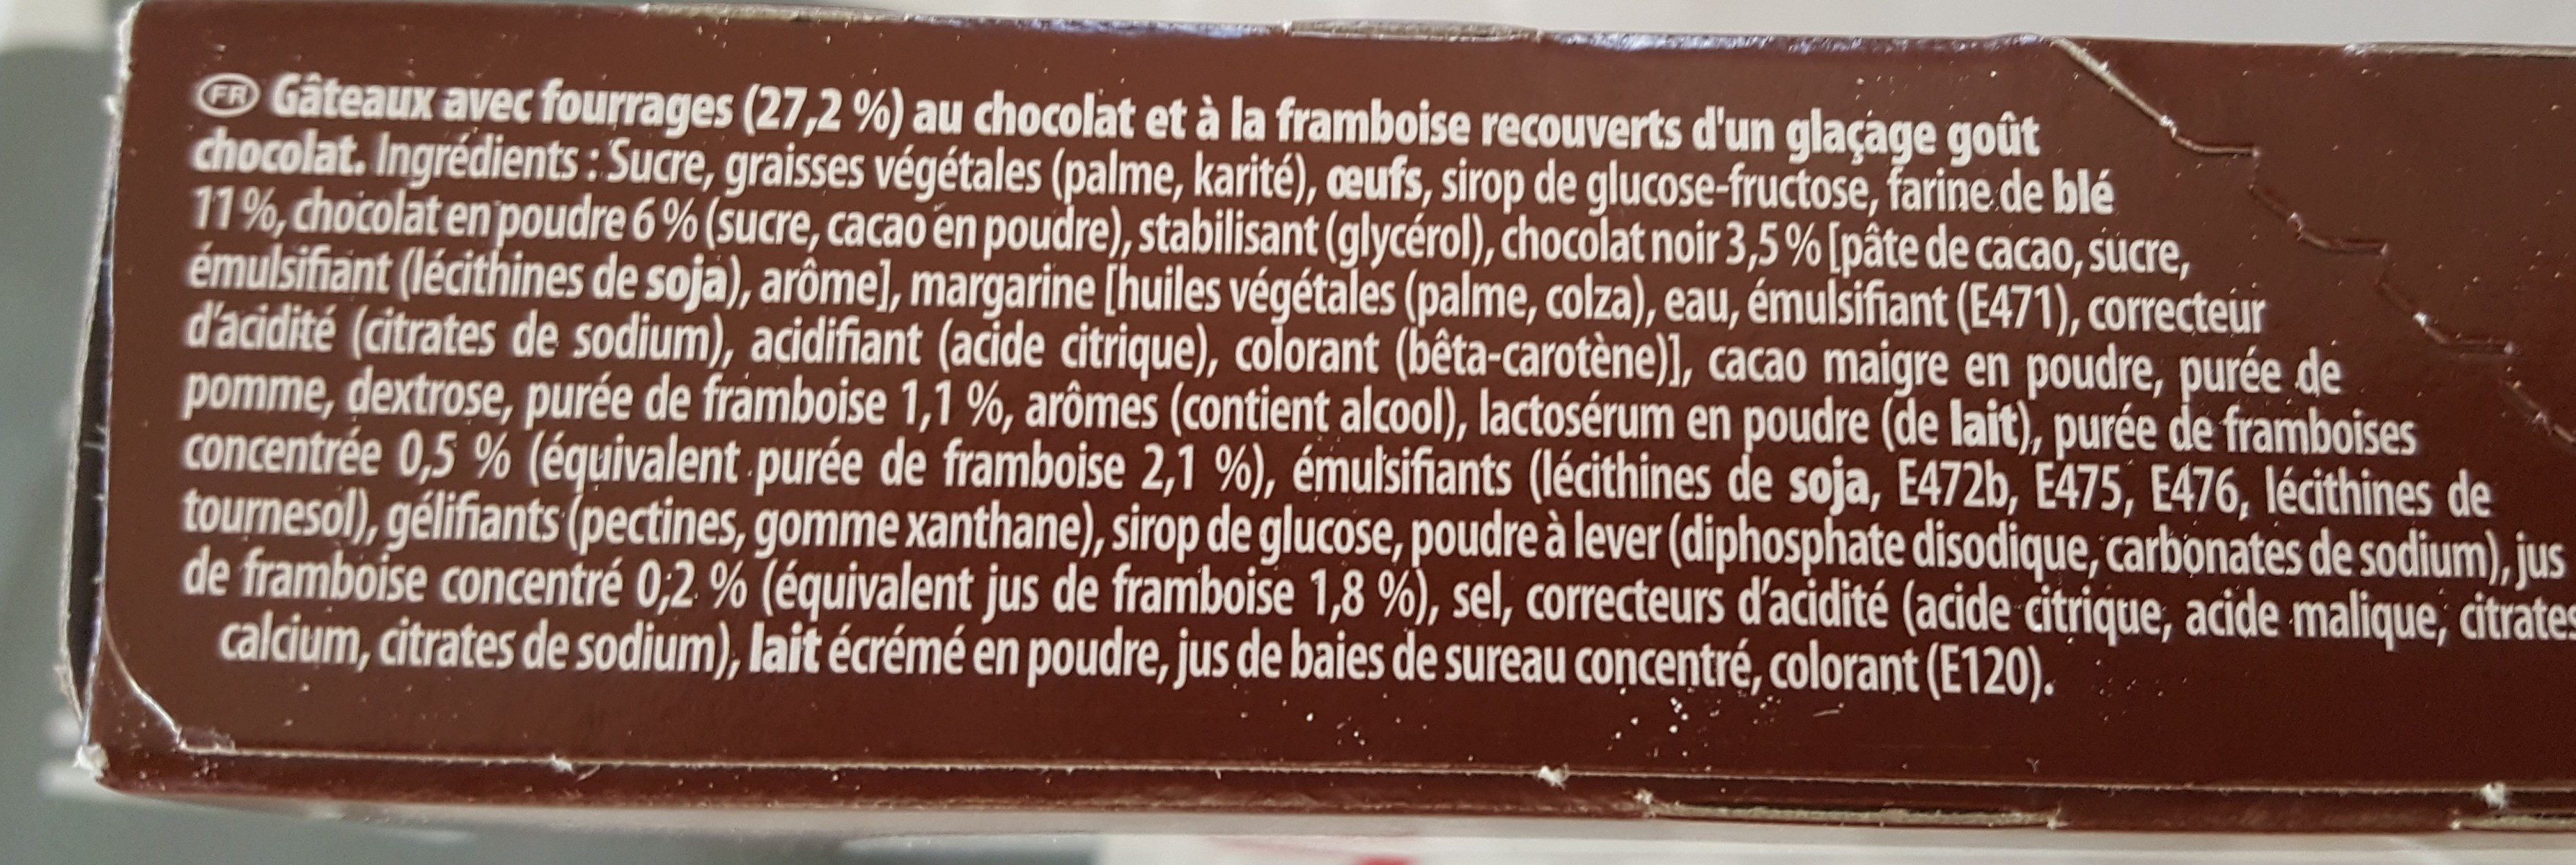 Napolitain Signature Chocolat Framboise - Ingredients - fr